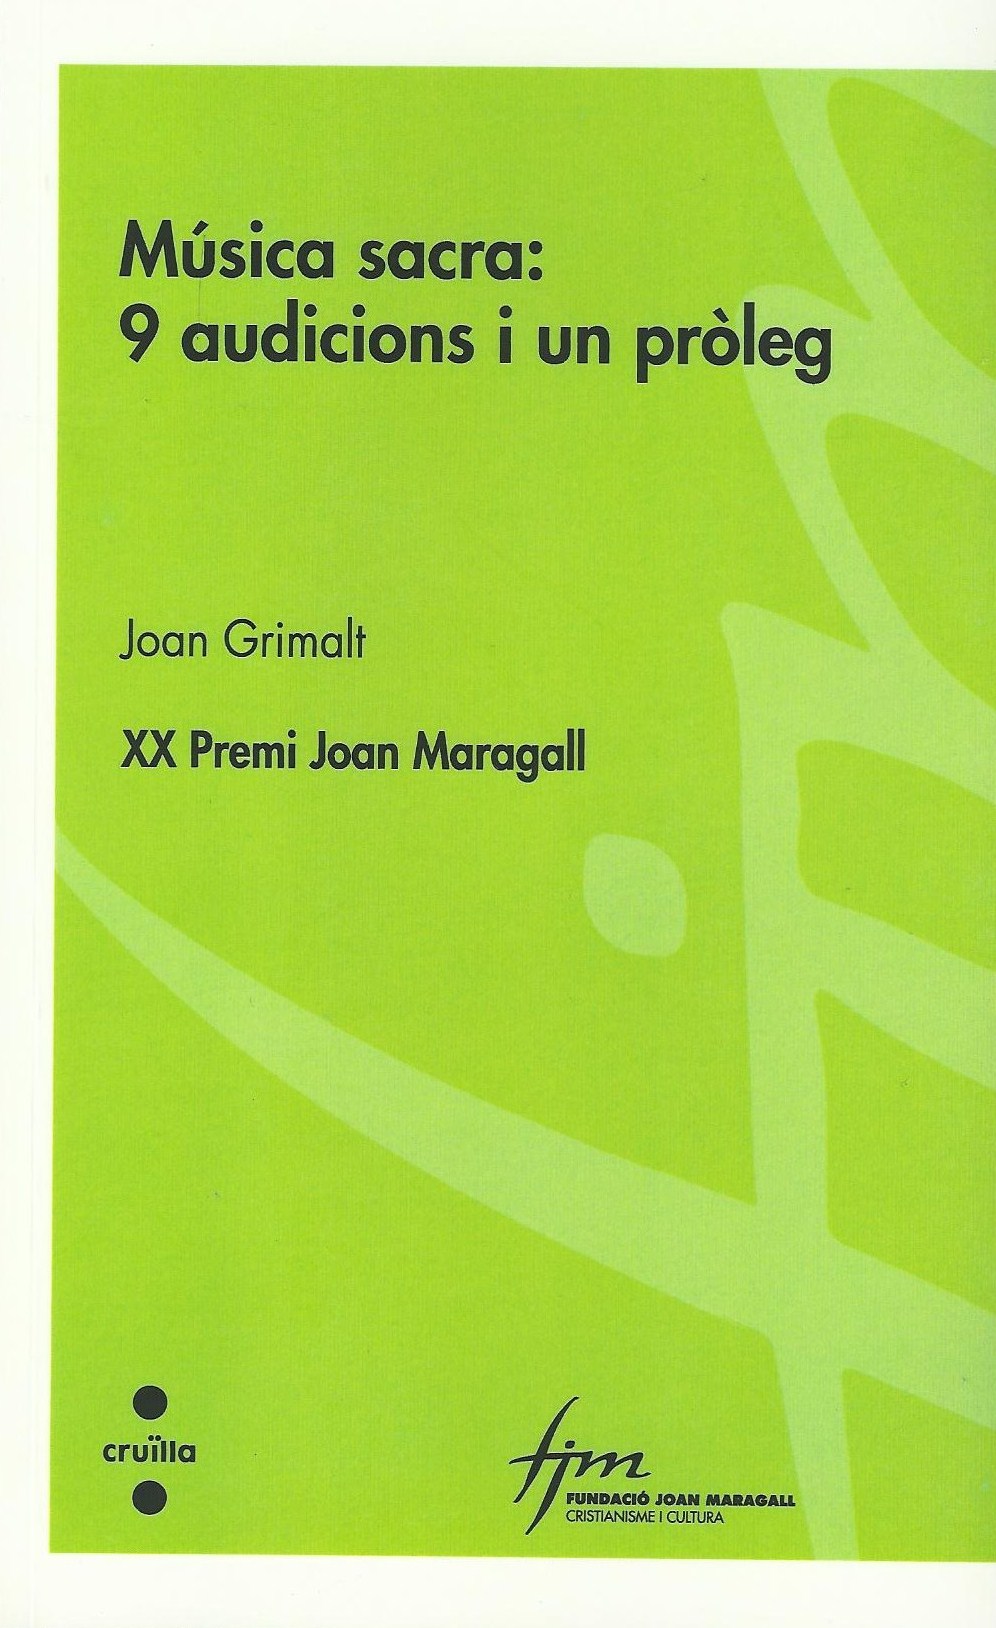 Musica sacra a la Fundaci Joan Maragall